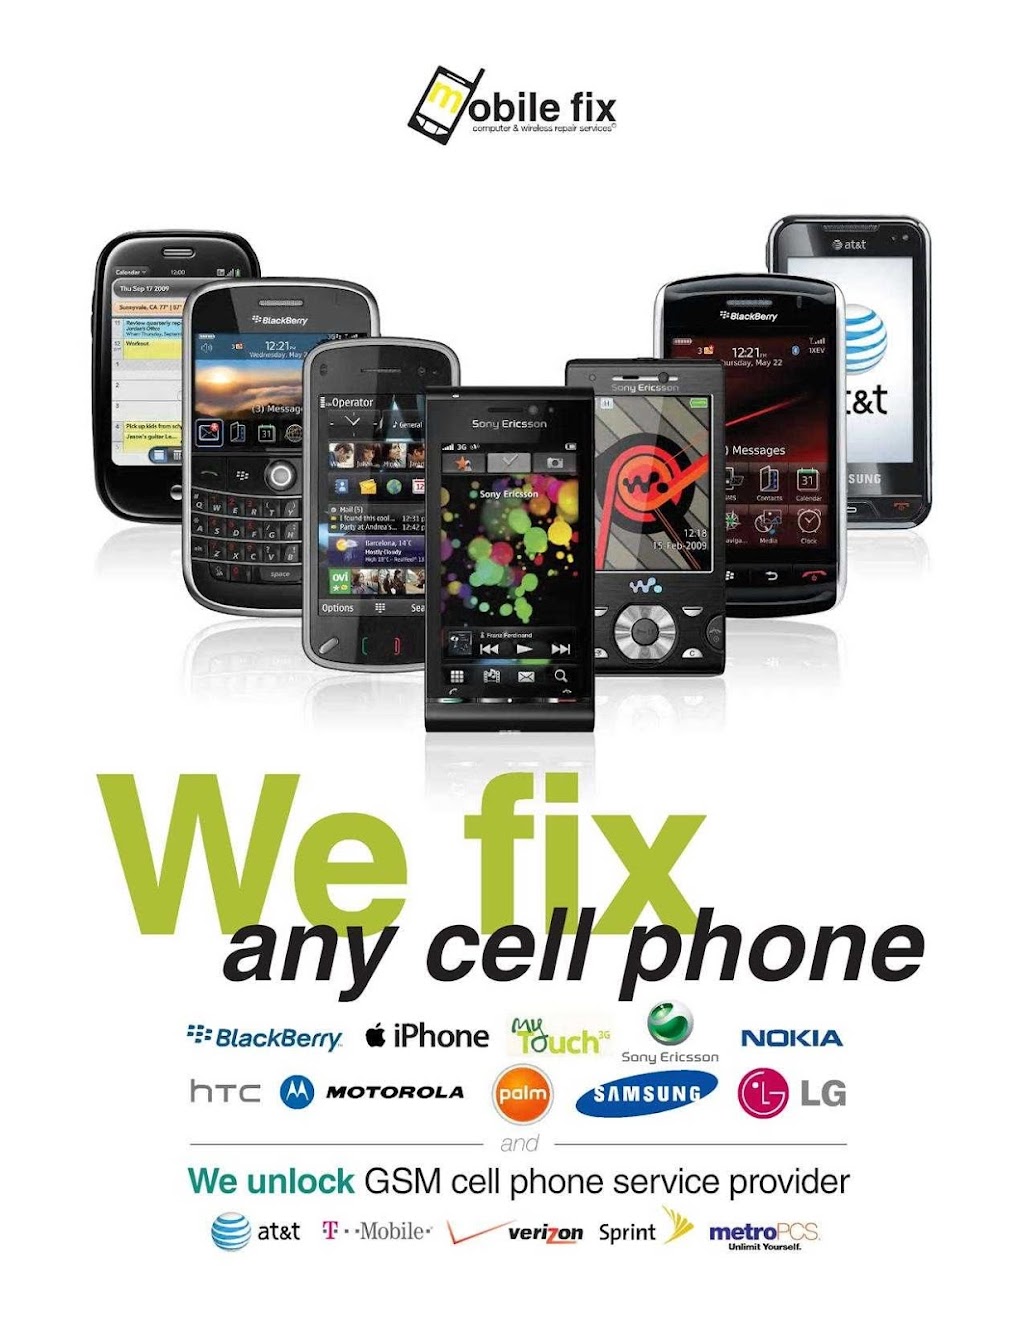 Mobile Fix Certified iphone ipad computer repair | 1099 Irving St, San Francisco, CA 94122 | Phone: (415) 810-0511